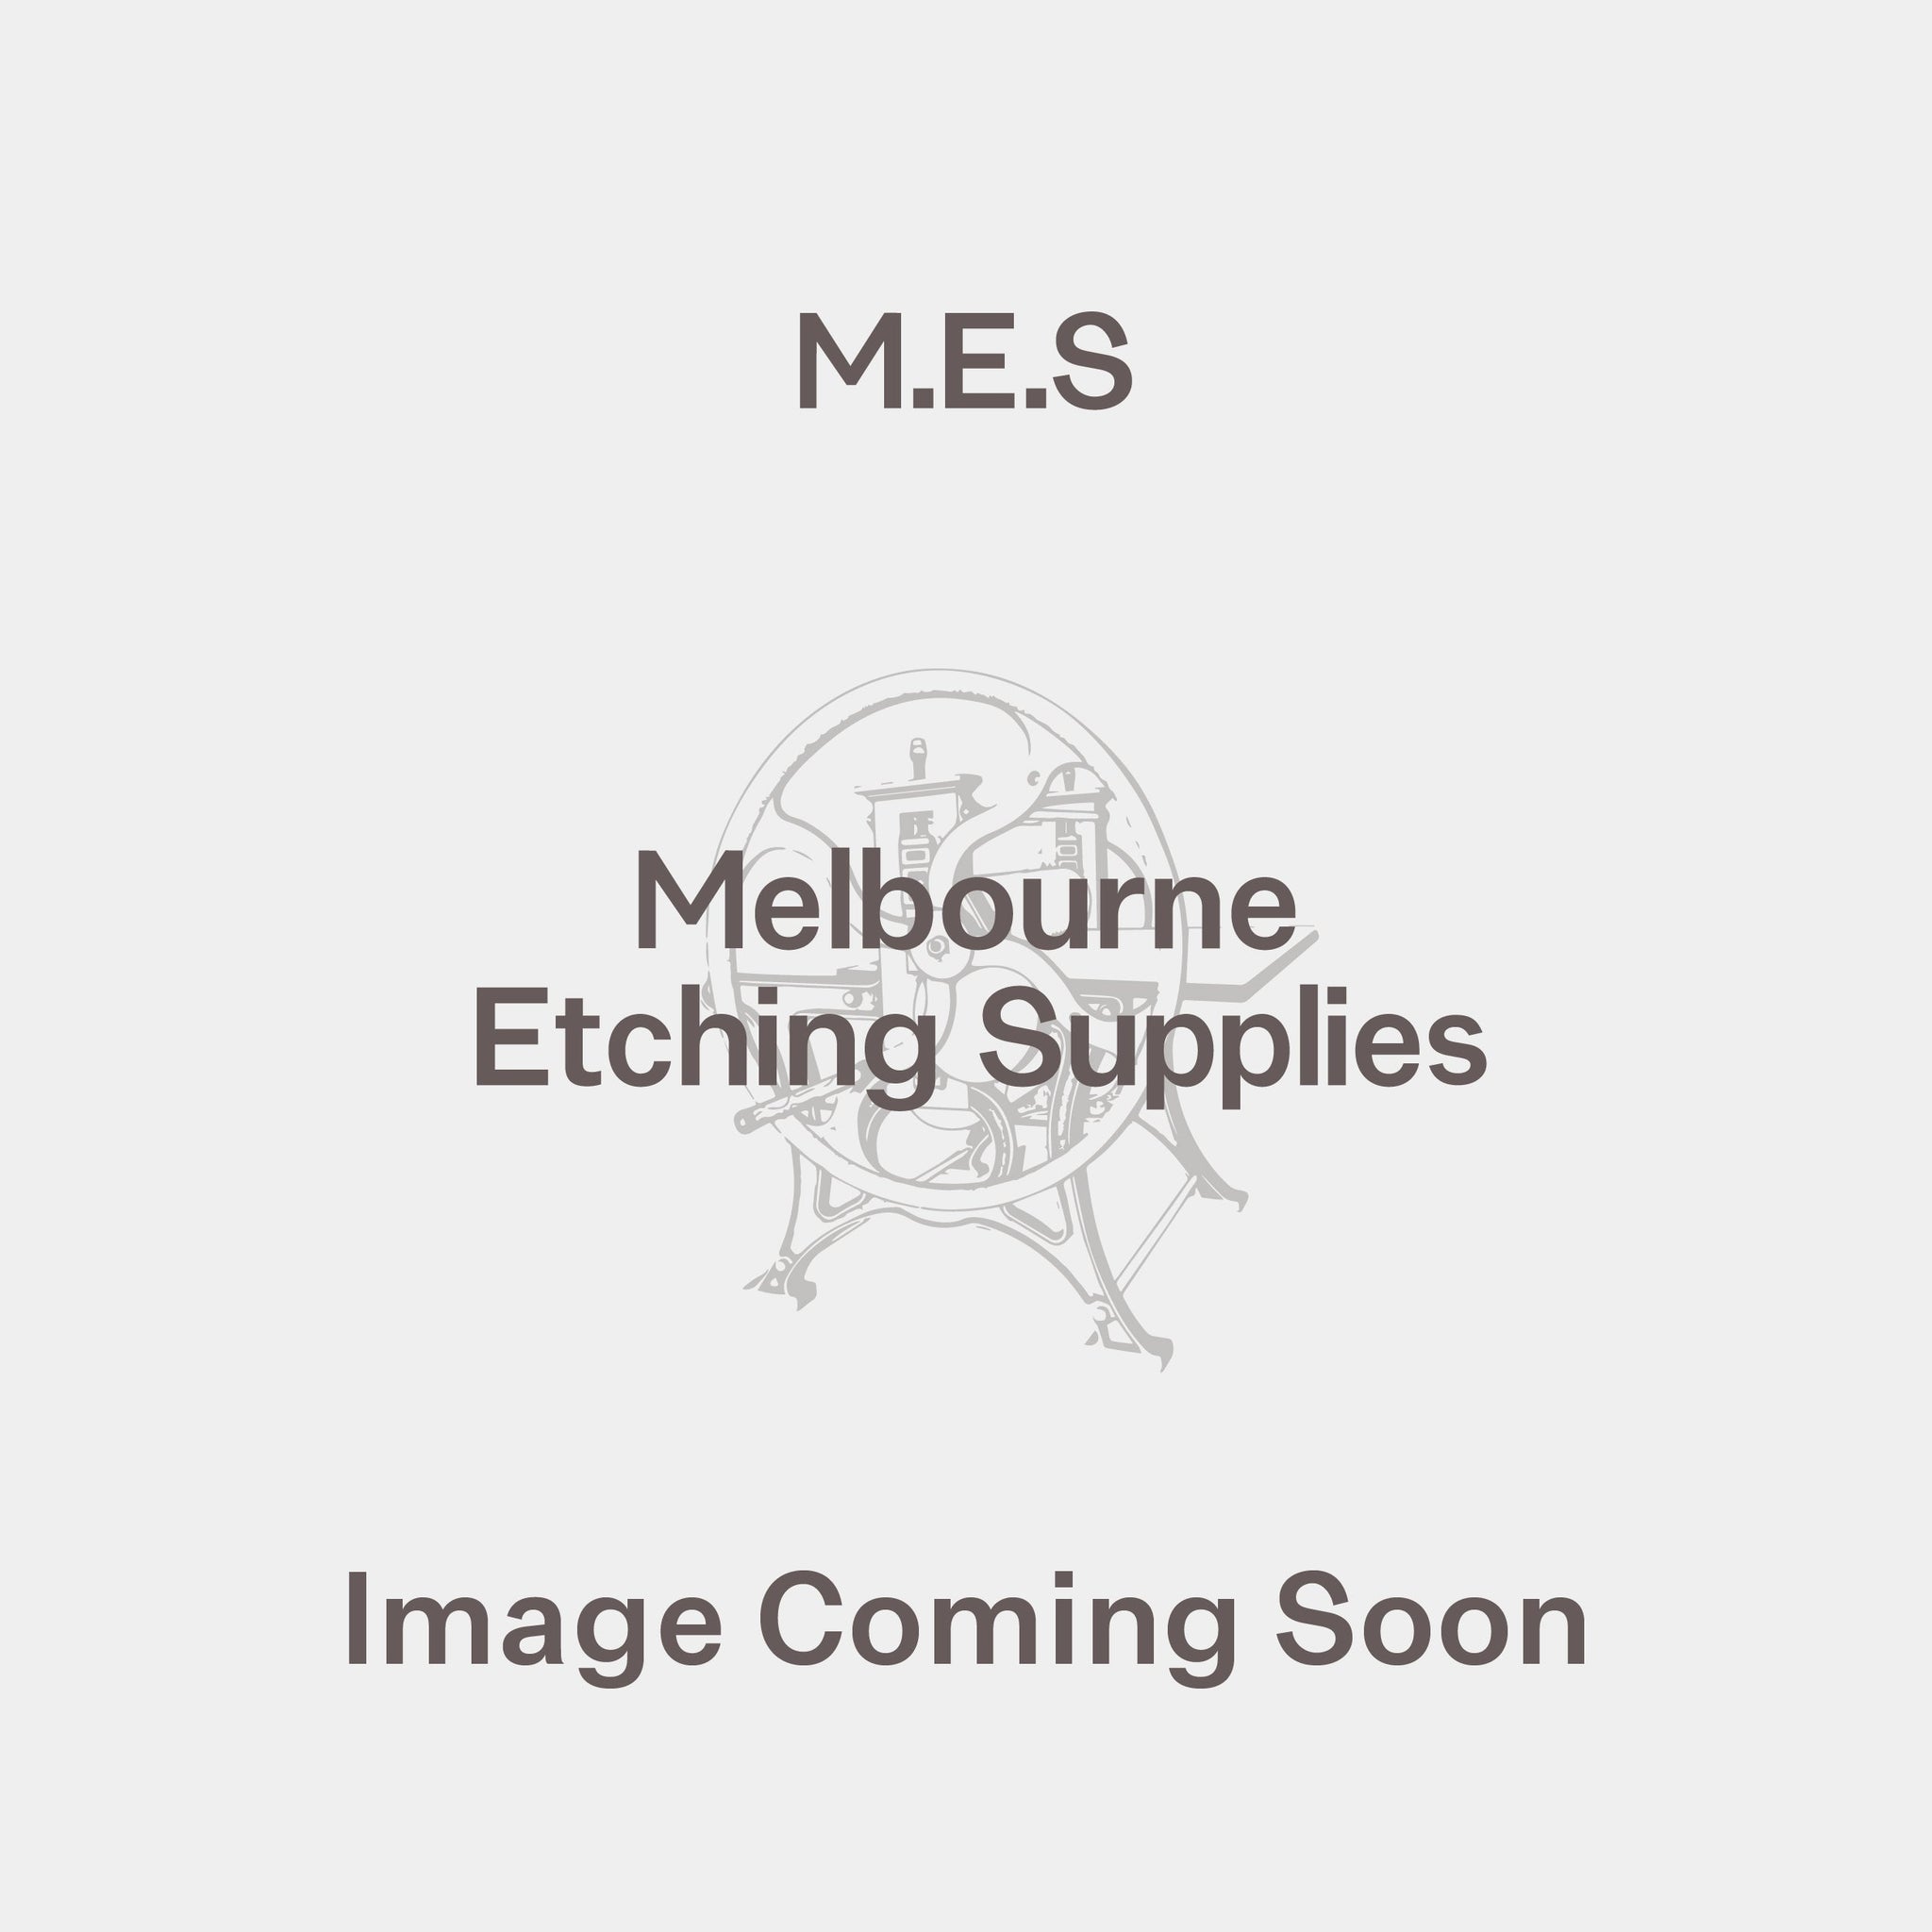 Somerset Enhanced Velvet 225gsm - Melbourne Etching Supplies